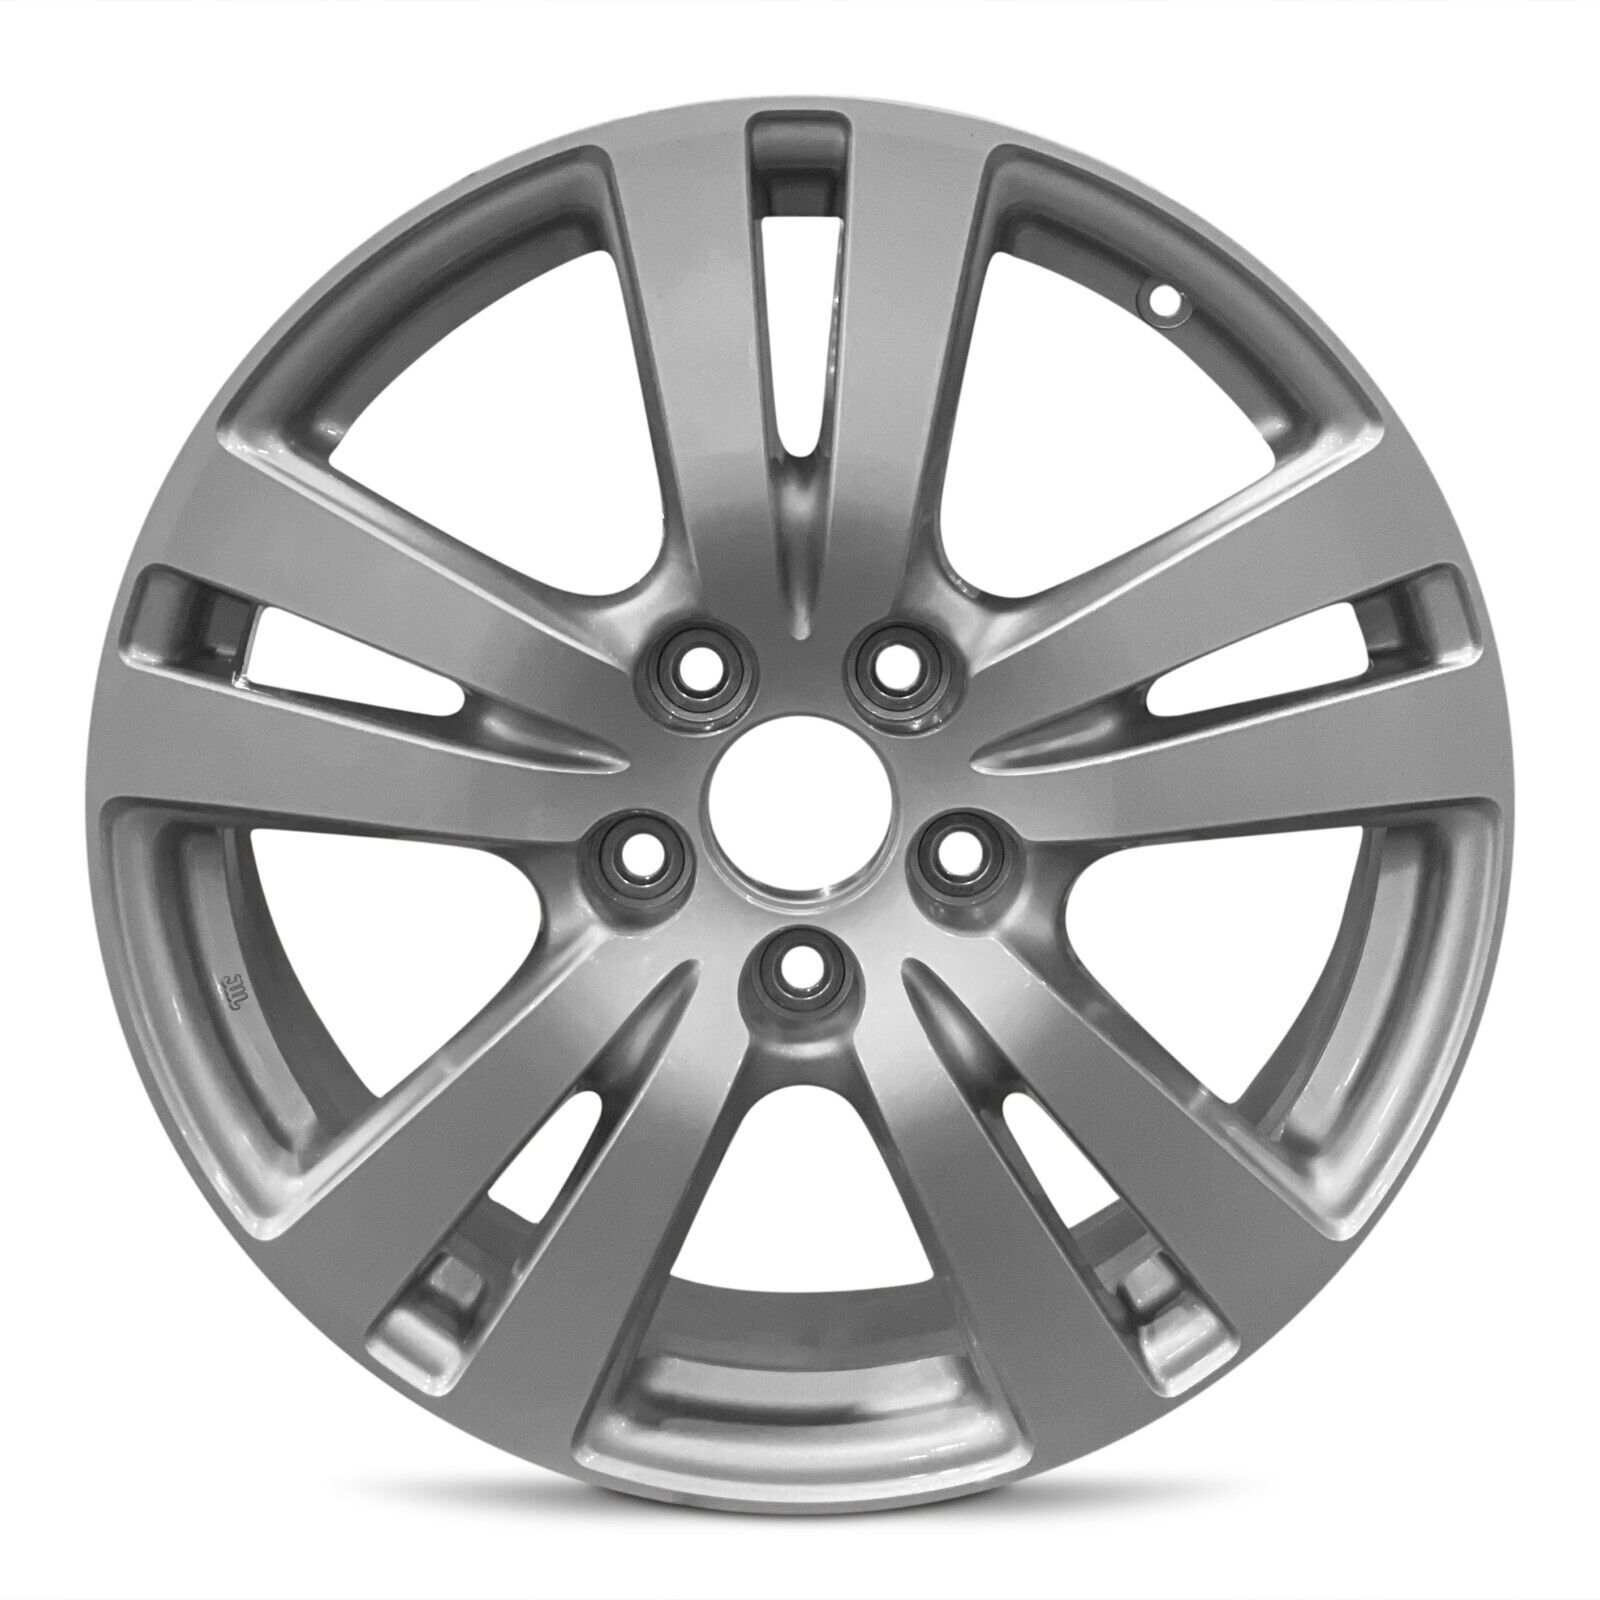 New OEM Wheel For 2017-2019 Honda Ridgeline 18 Inch Painted Silver Alloy Rim